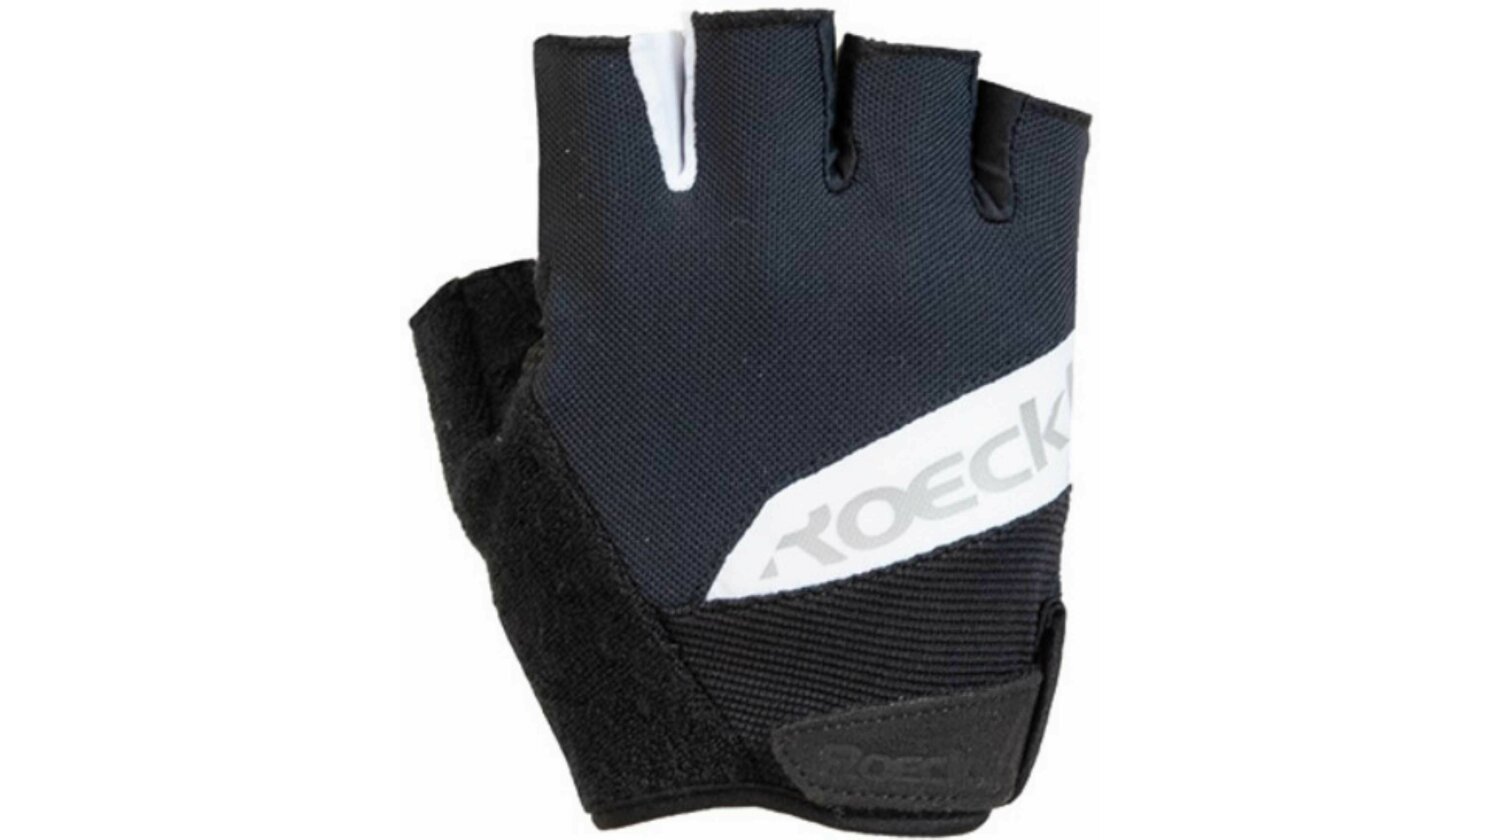 Roeckl Bike Performance Bozen Handschuhe kurz schwarz/weiß